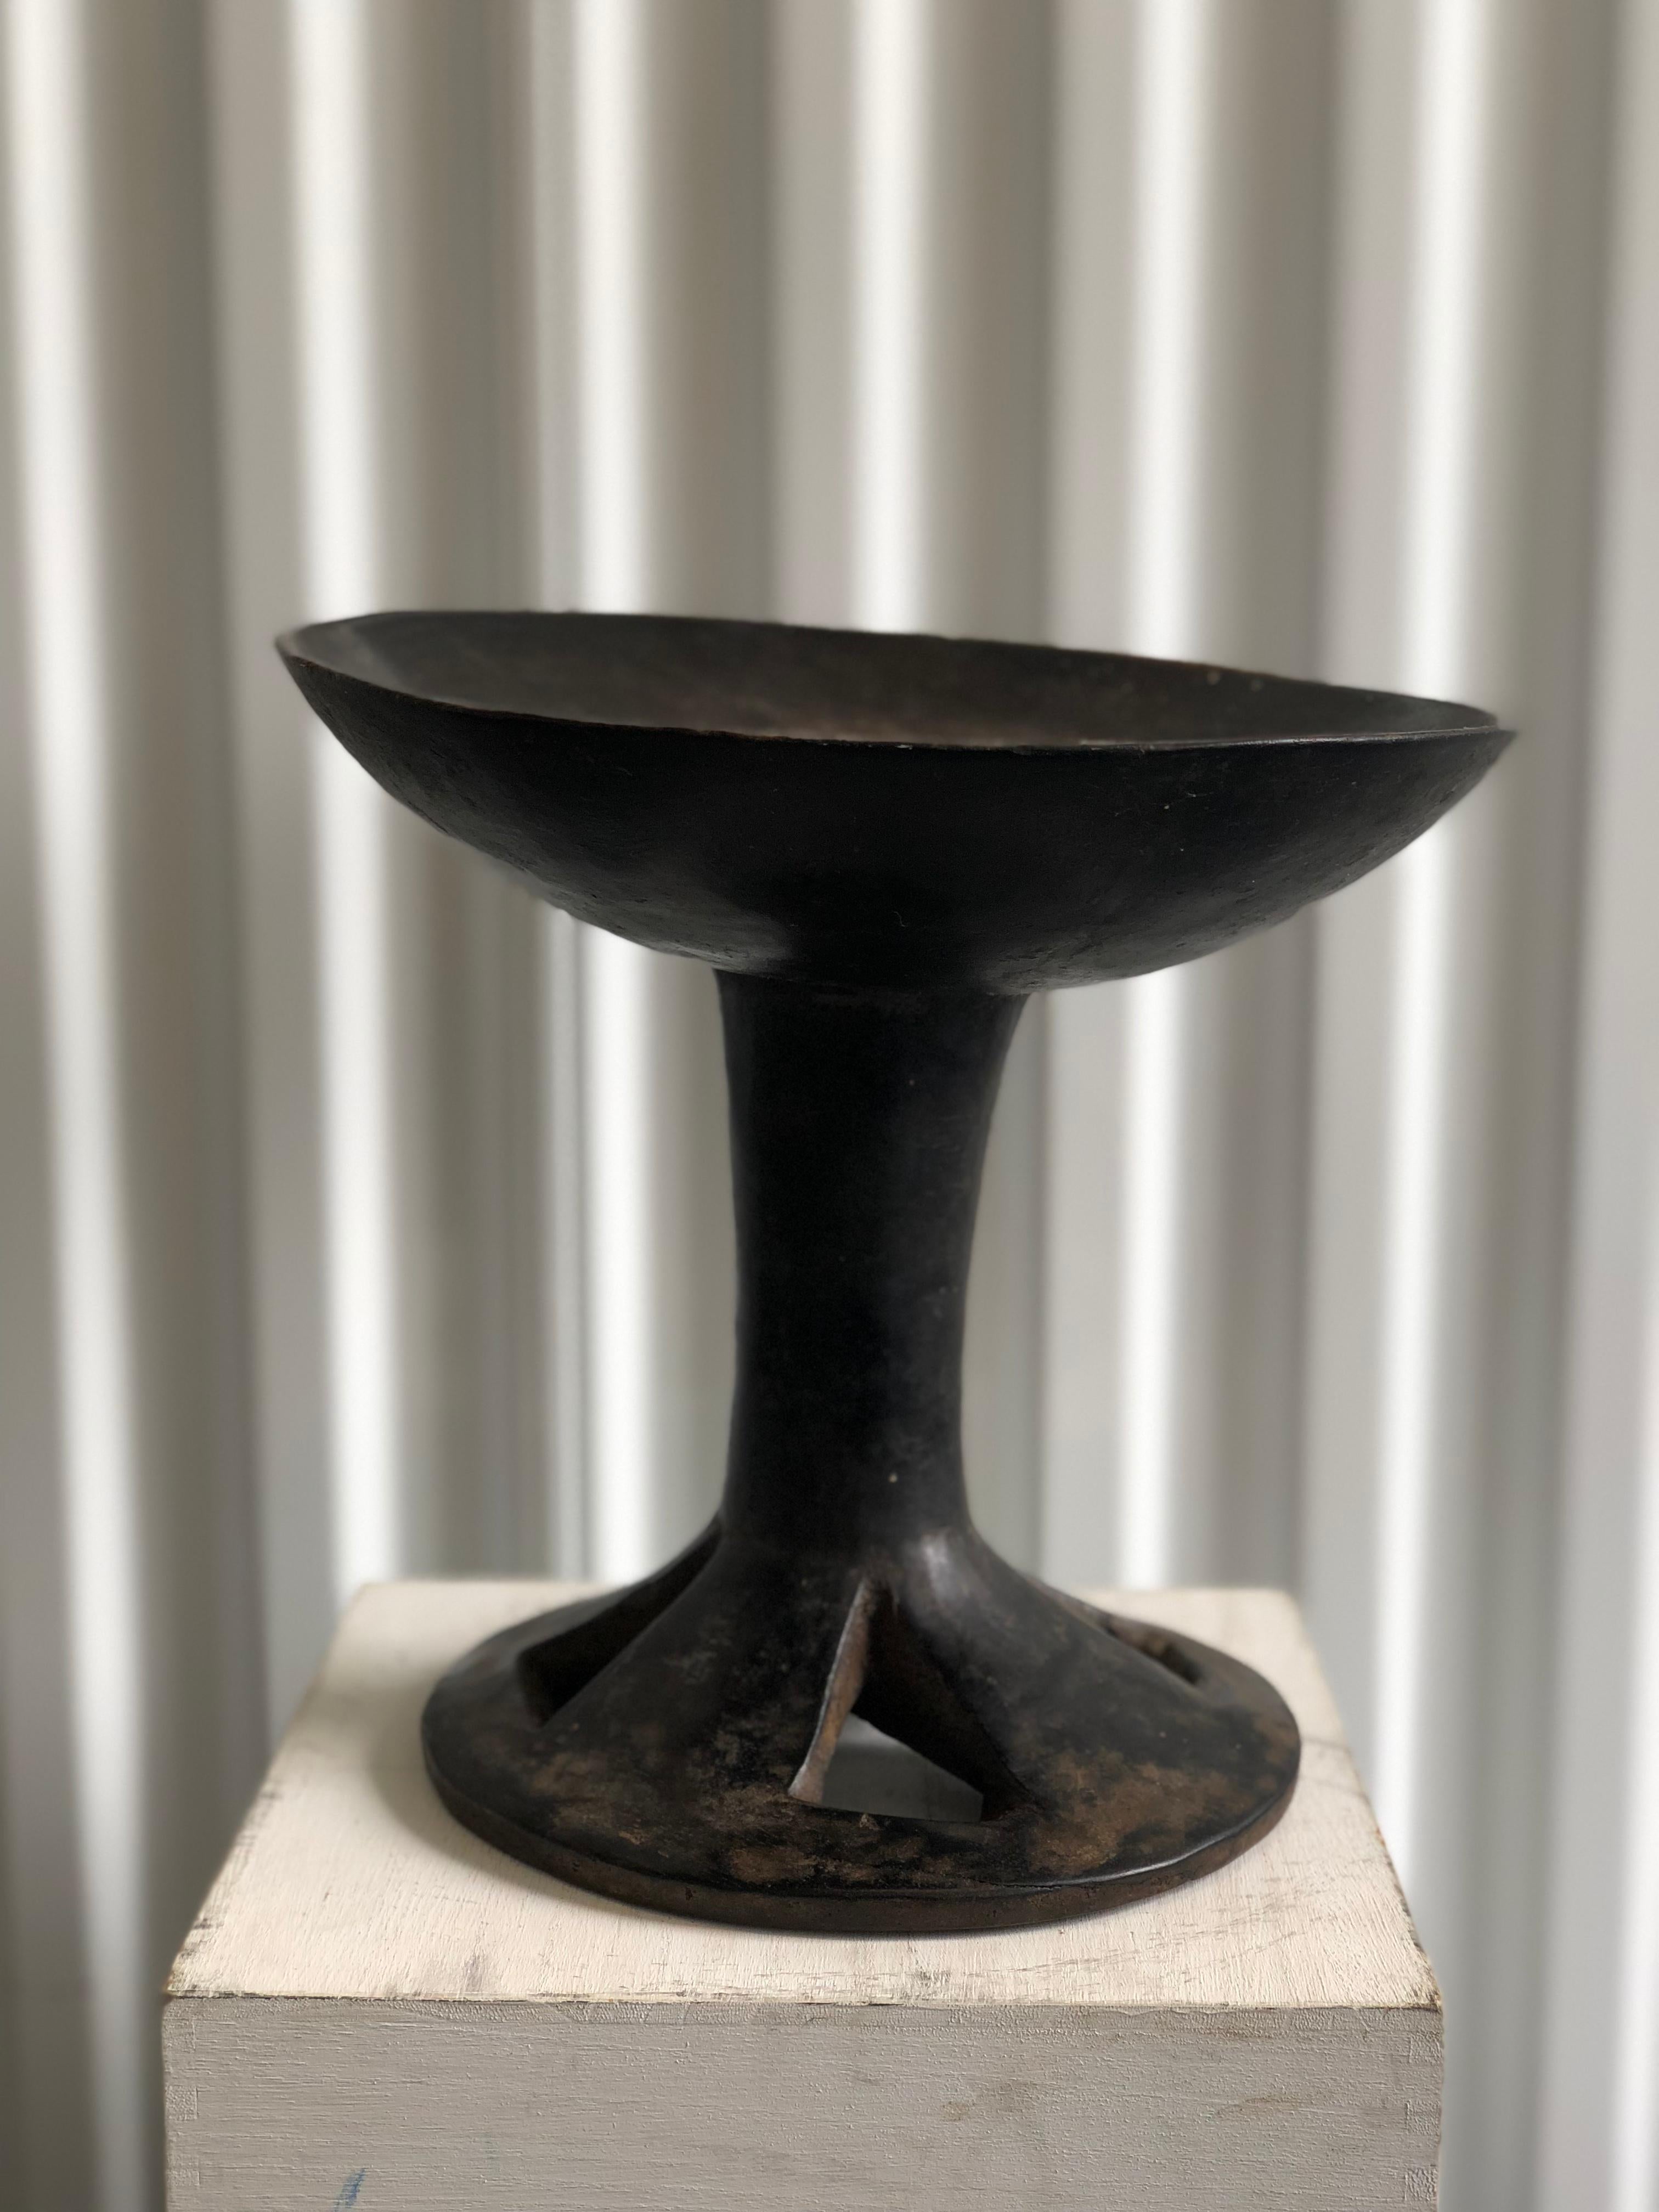 African wooden carved pedestal bowl

Diameter of bowl is 12